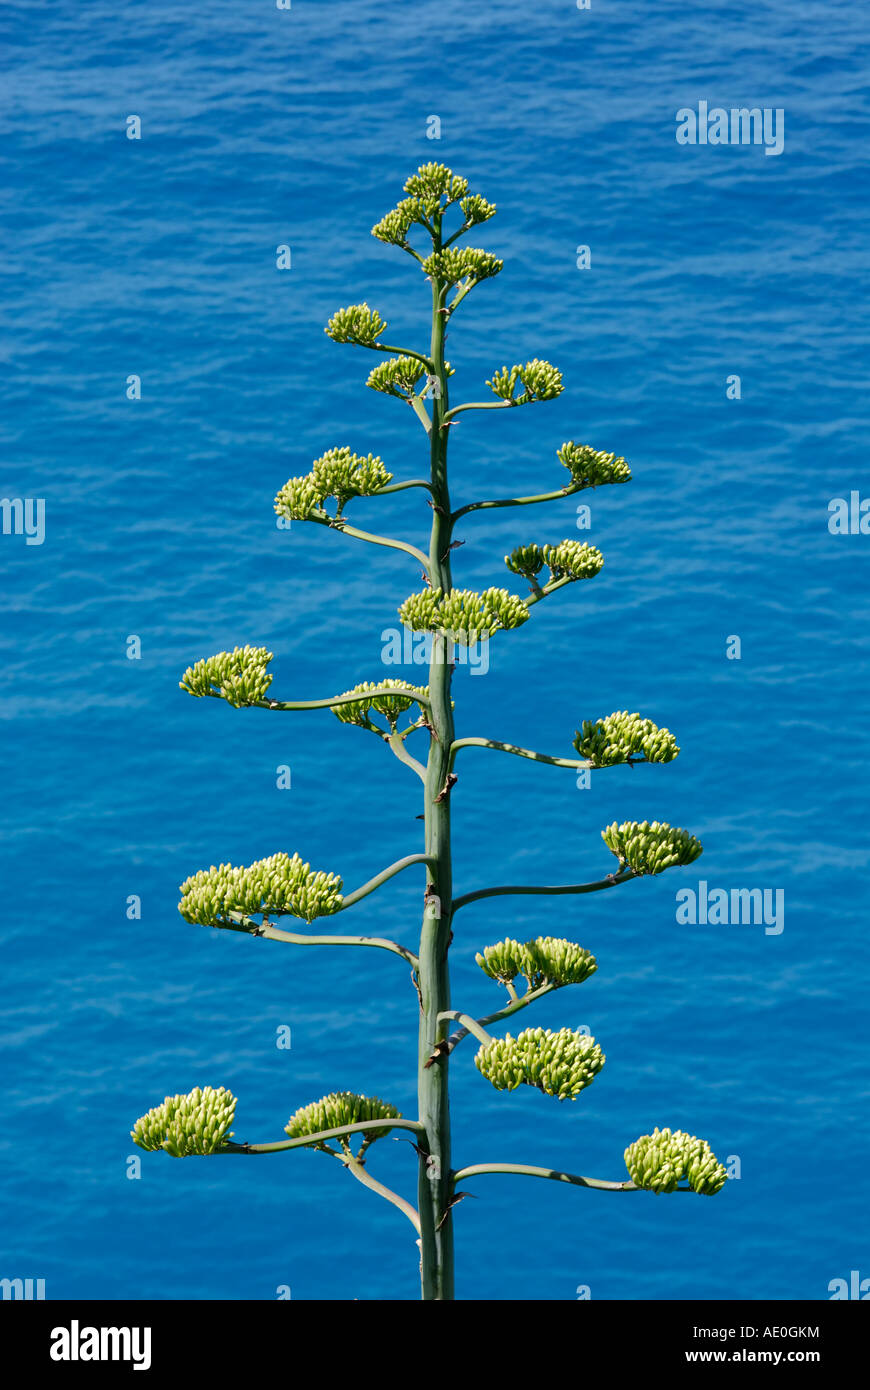 Agave americana Agave Century Plant along the coast of the Ligurian Sea Italy Stock Photo